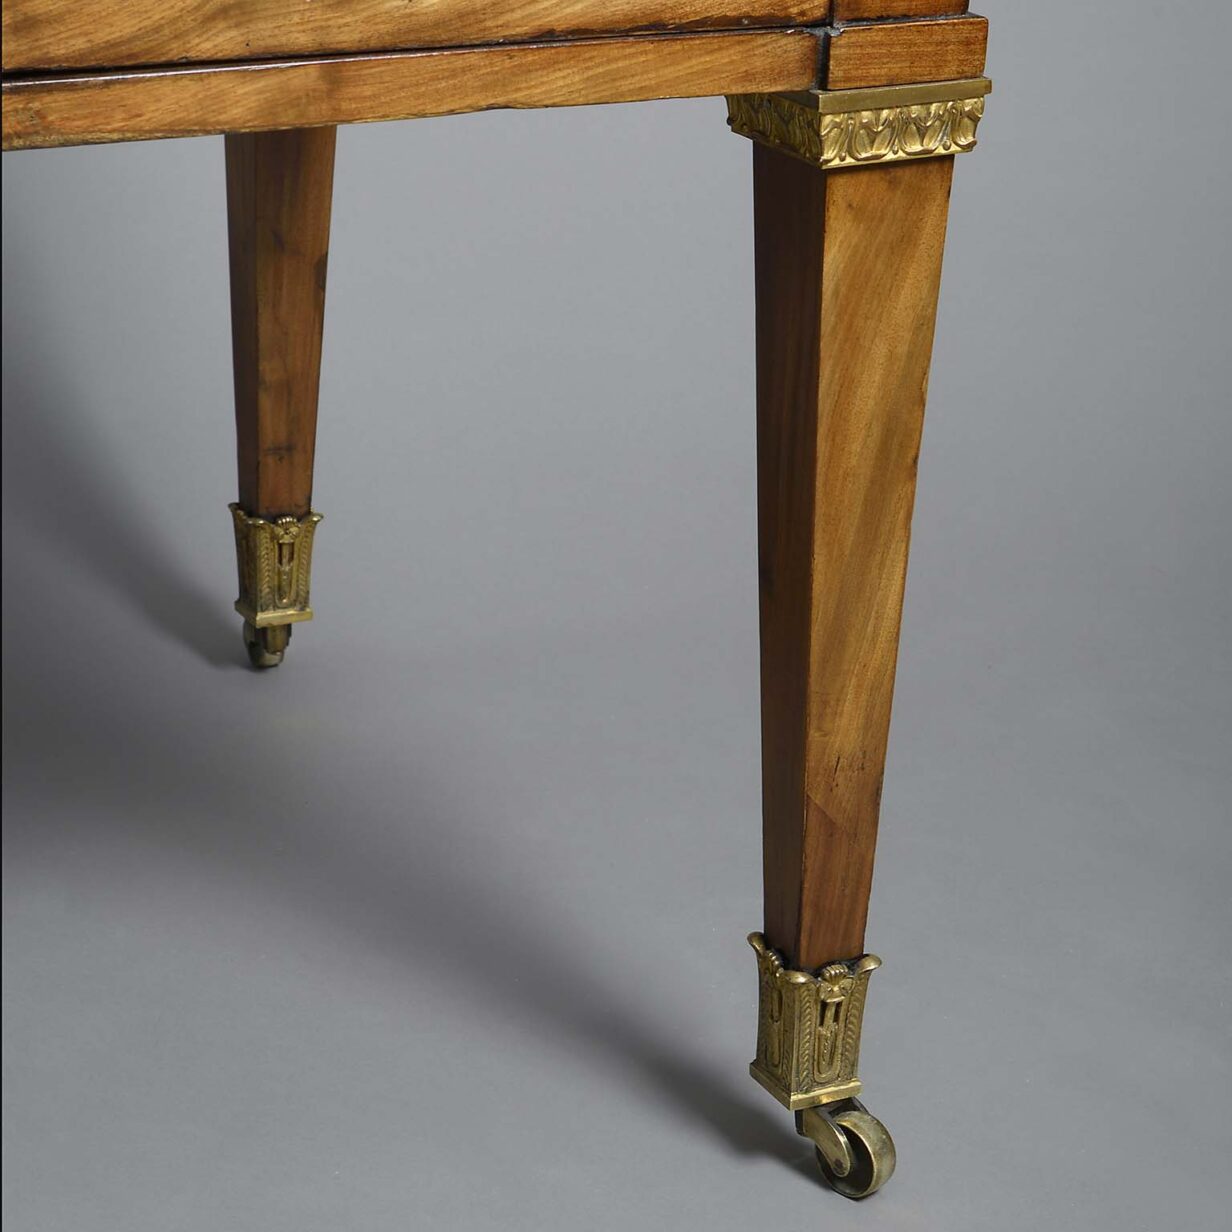 A fine late 18th century louis xvi period mahogany bureau plat